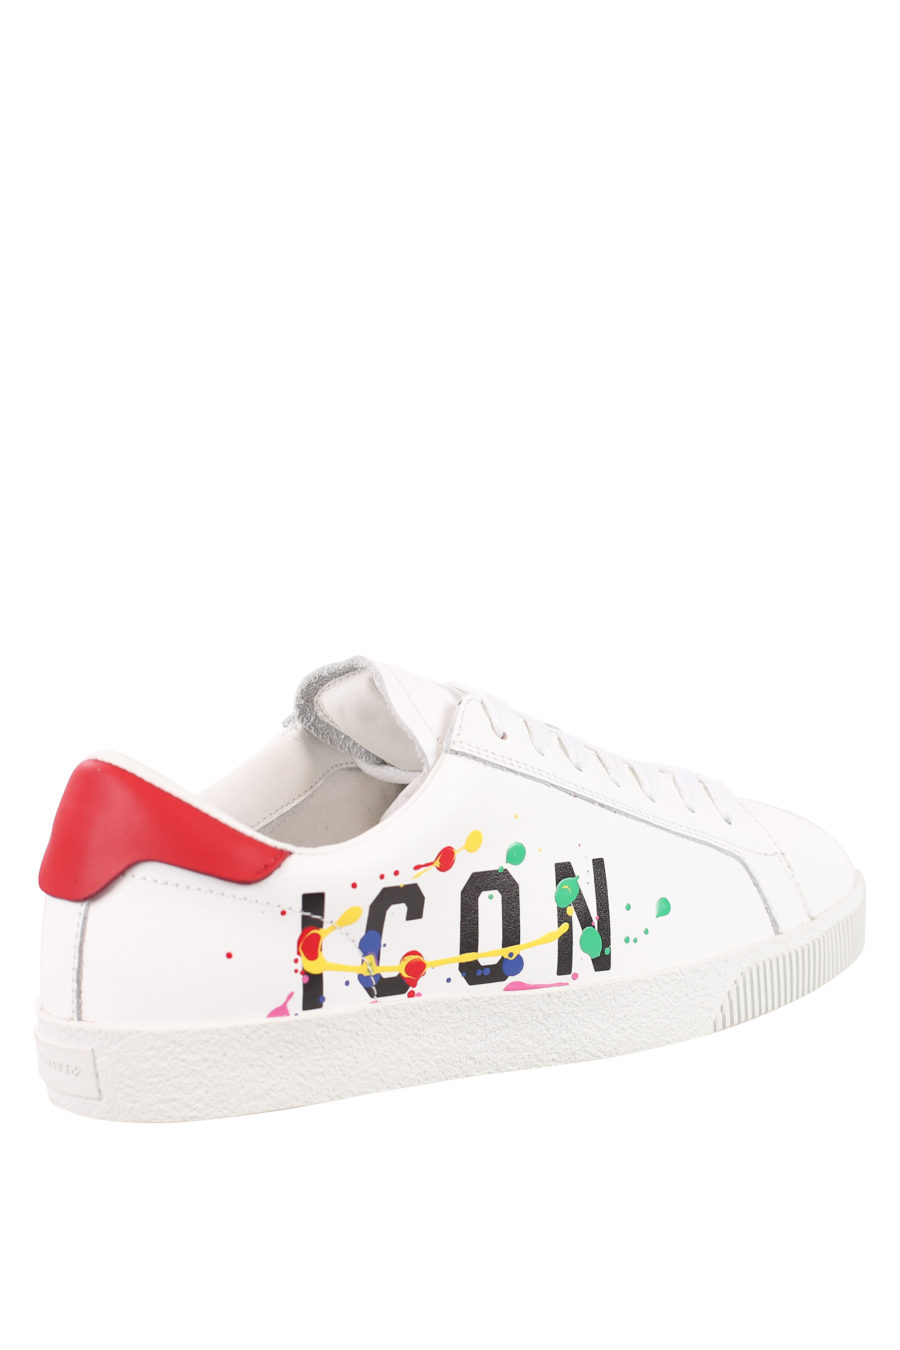 White trainers with "icon splash" logo - IMG 0708